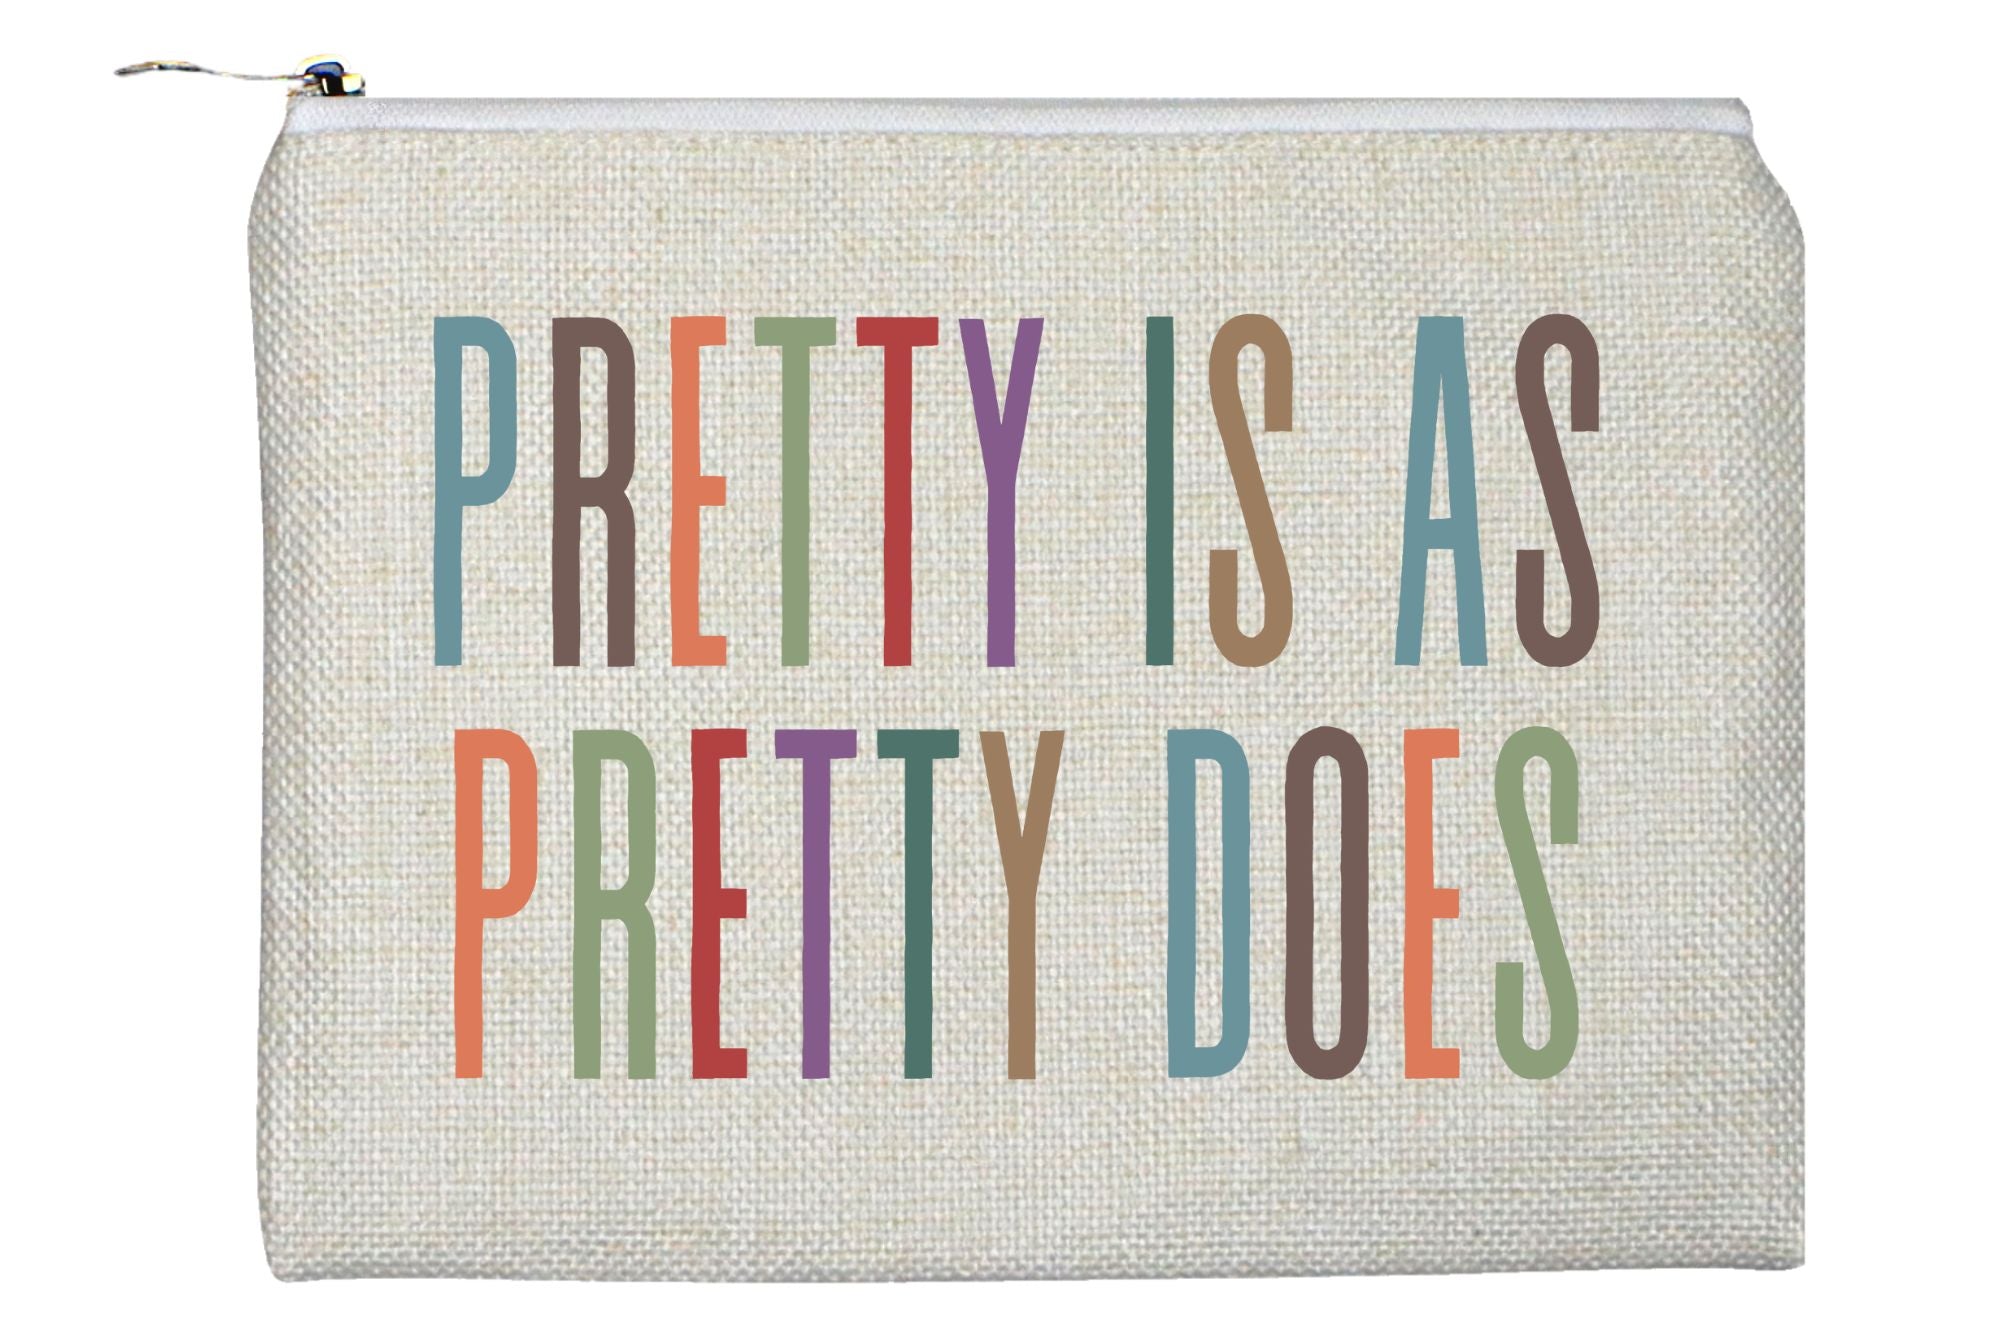 Pretty Is As Pretty Does Accessory Bag